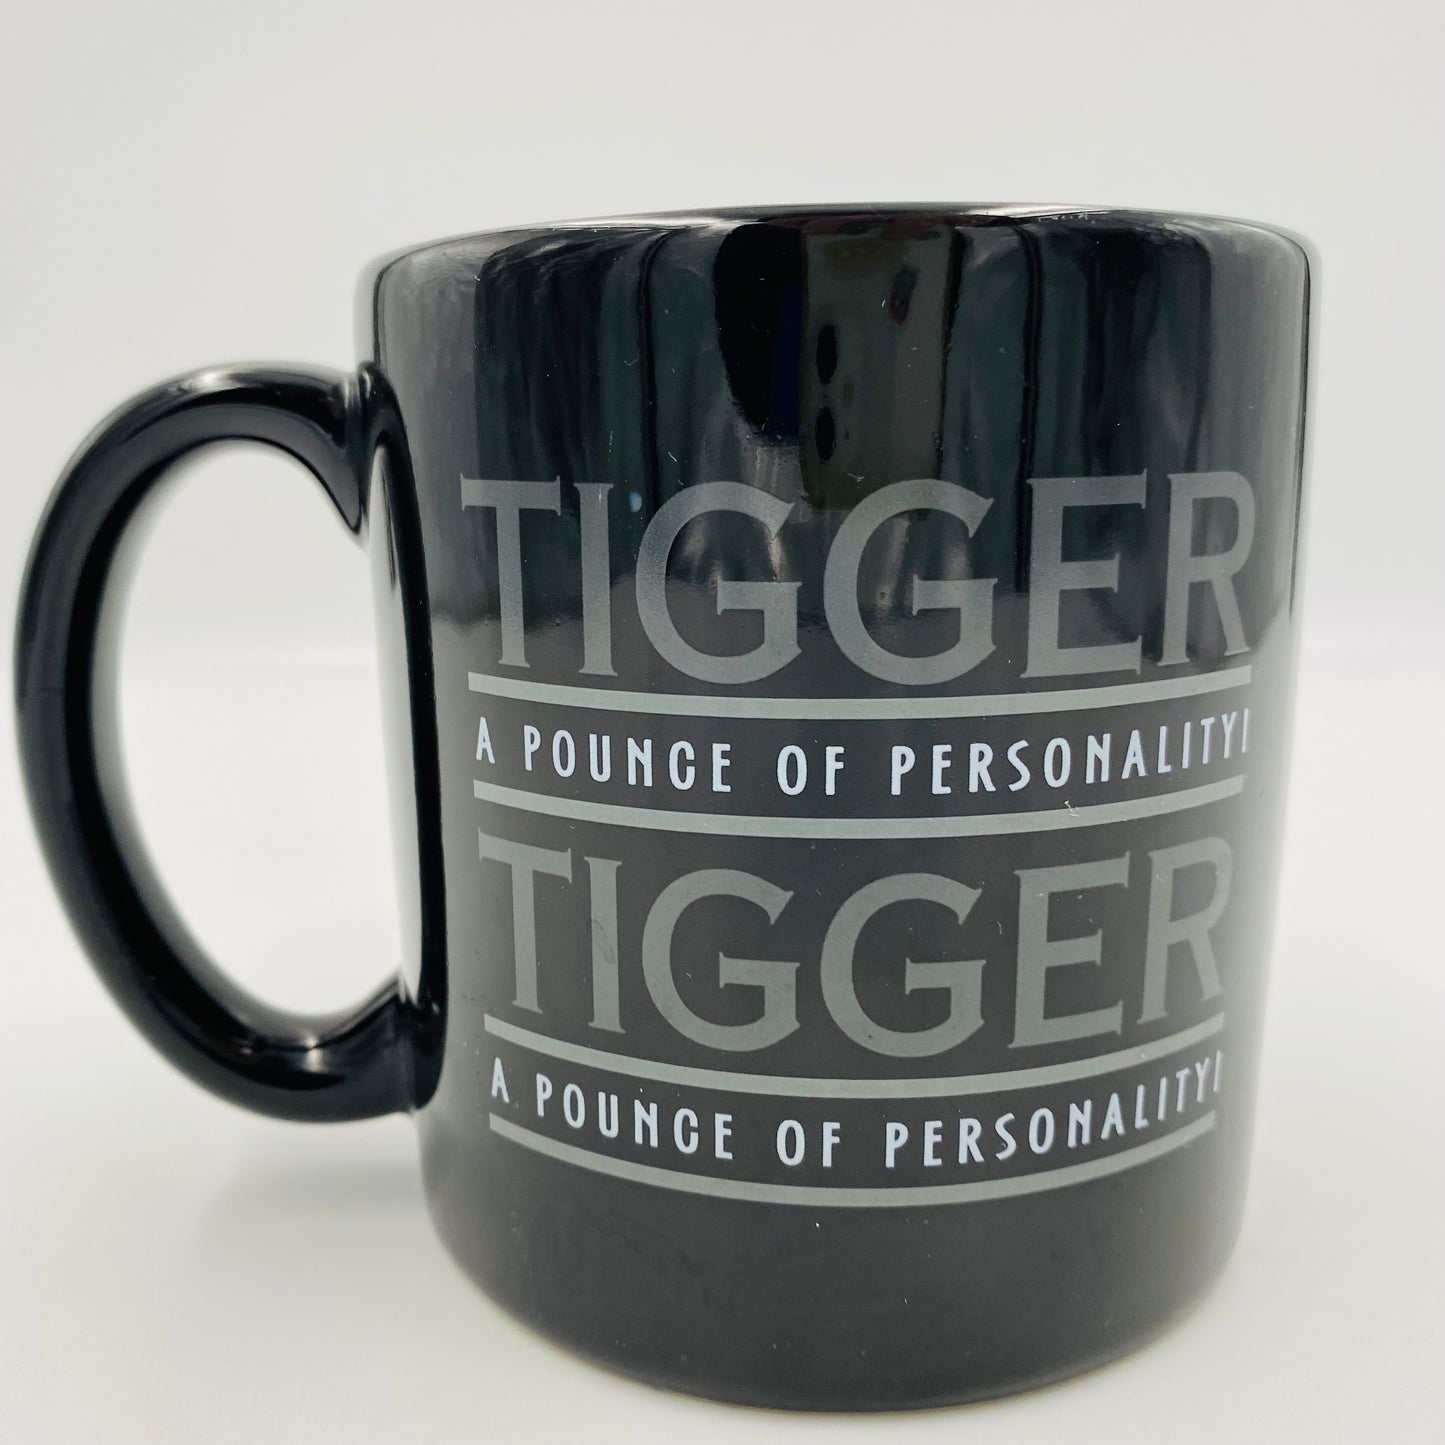 Tigger A Pounce Of Personality mug